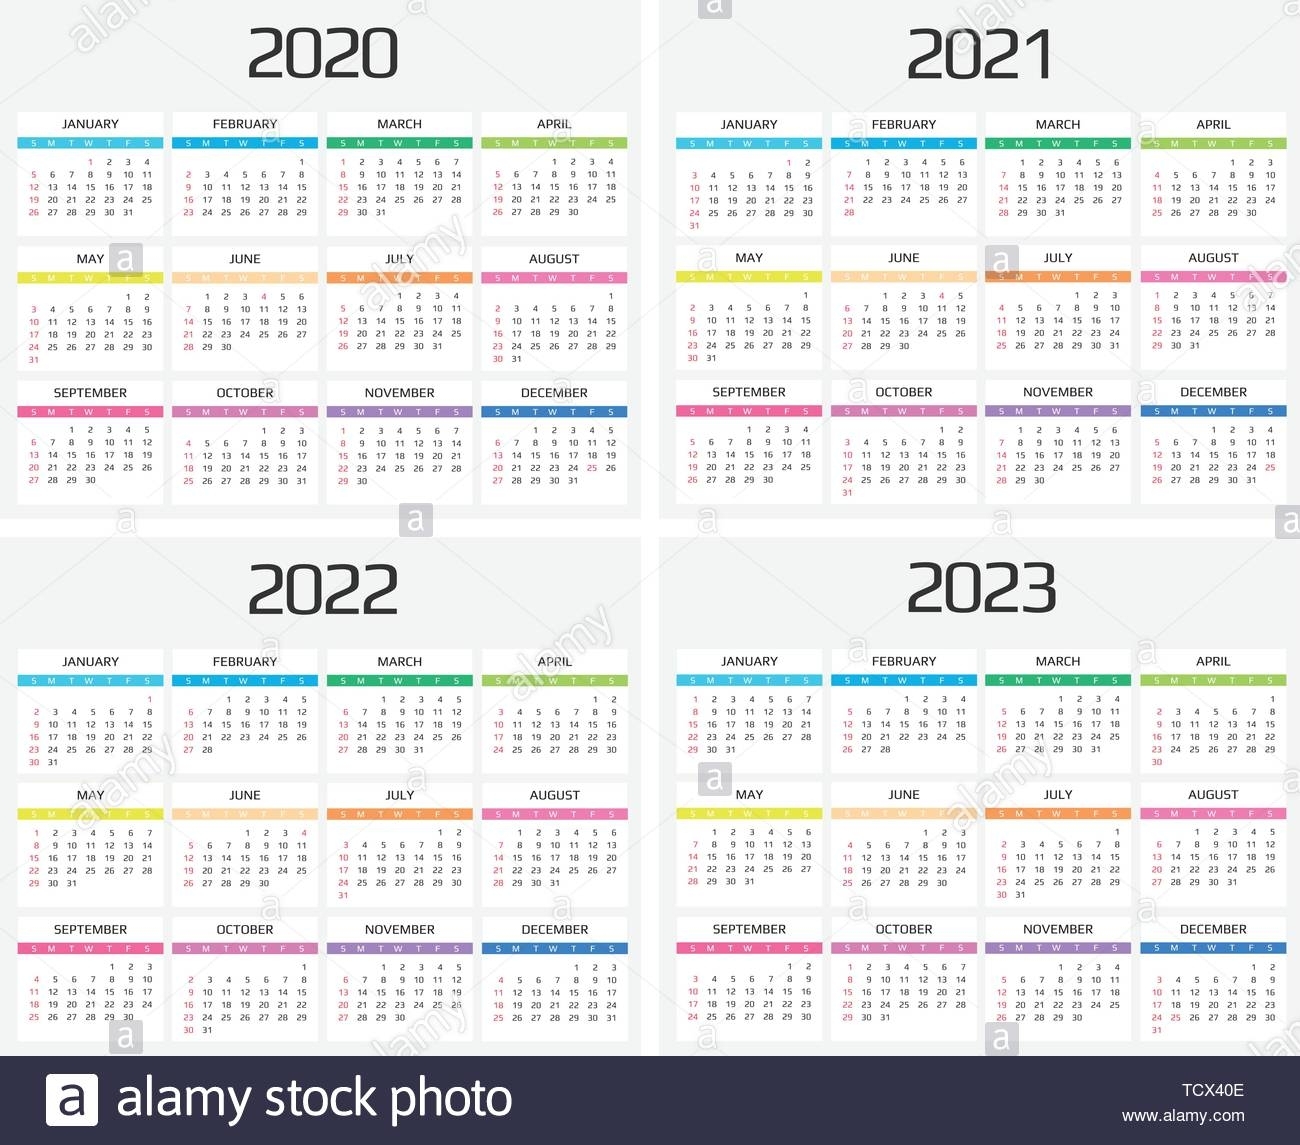 Calendar 2020, 2021, 2022, 2023 Template. 12 Months. Include with regard to Calendars 2020 2021 2022 2023